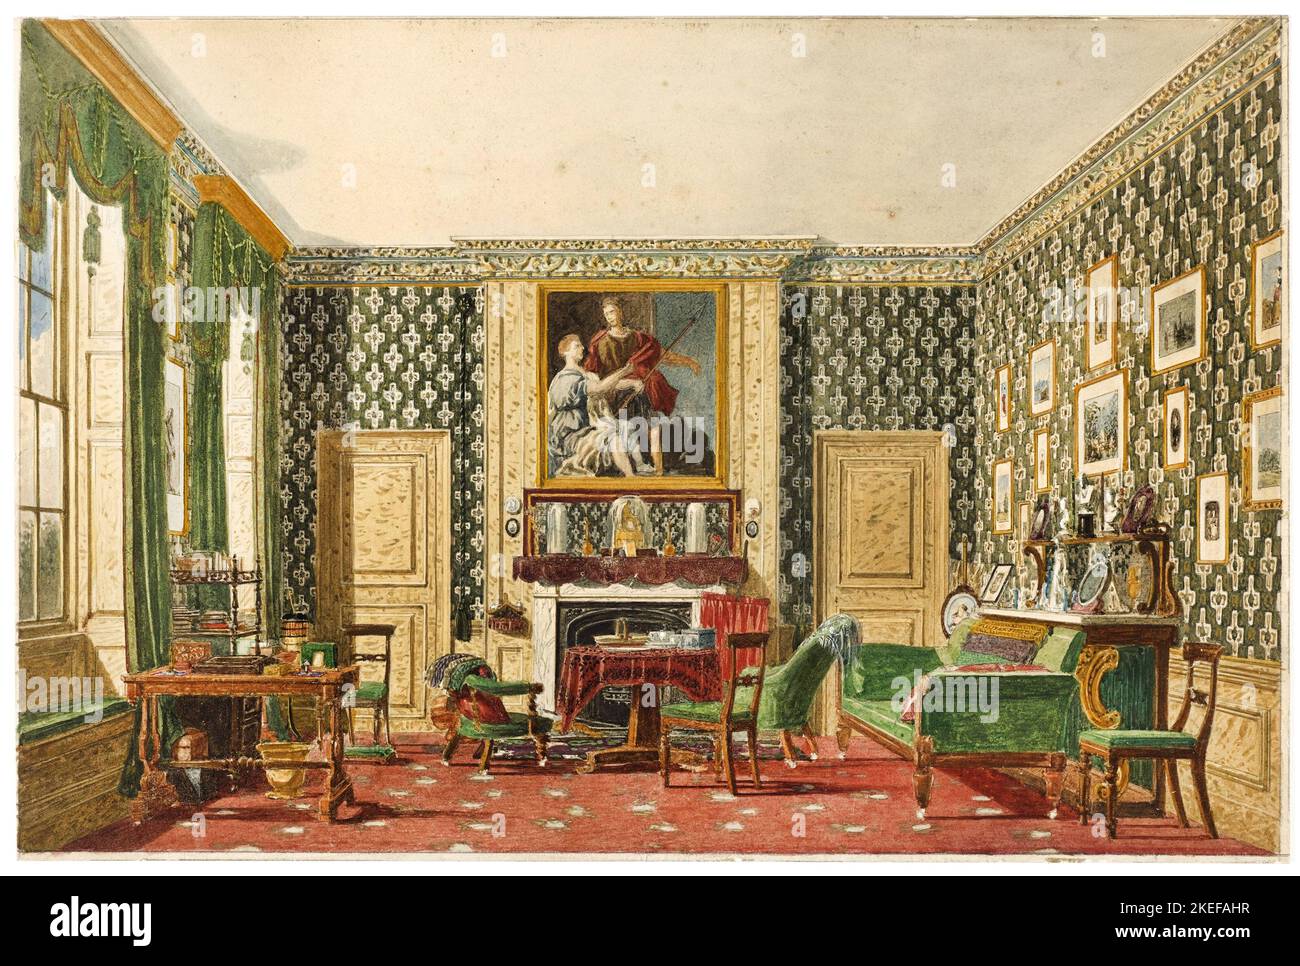 Mary Ellen Best, an Interior, circa 1837-1840, Brush and Watercolor, grafite su carta bianca in vove, Cooper Hewitt, Smithsonian Design Museum, USA. Foto Stock